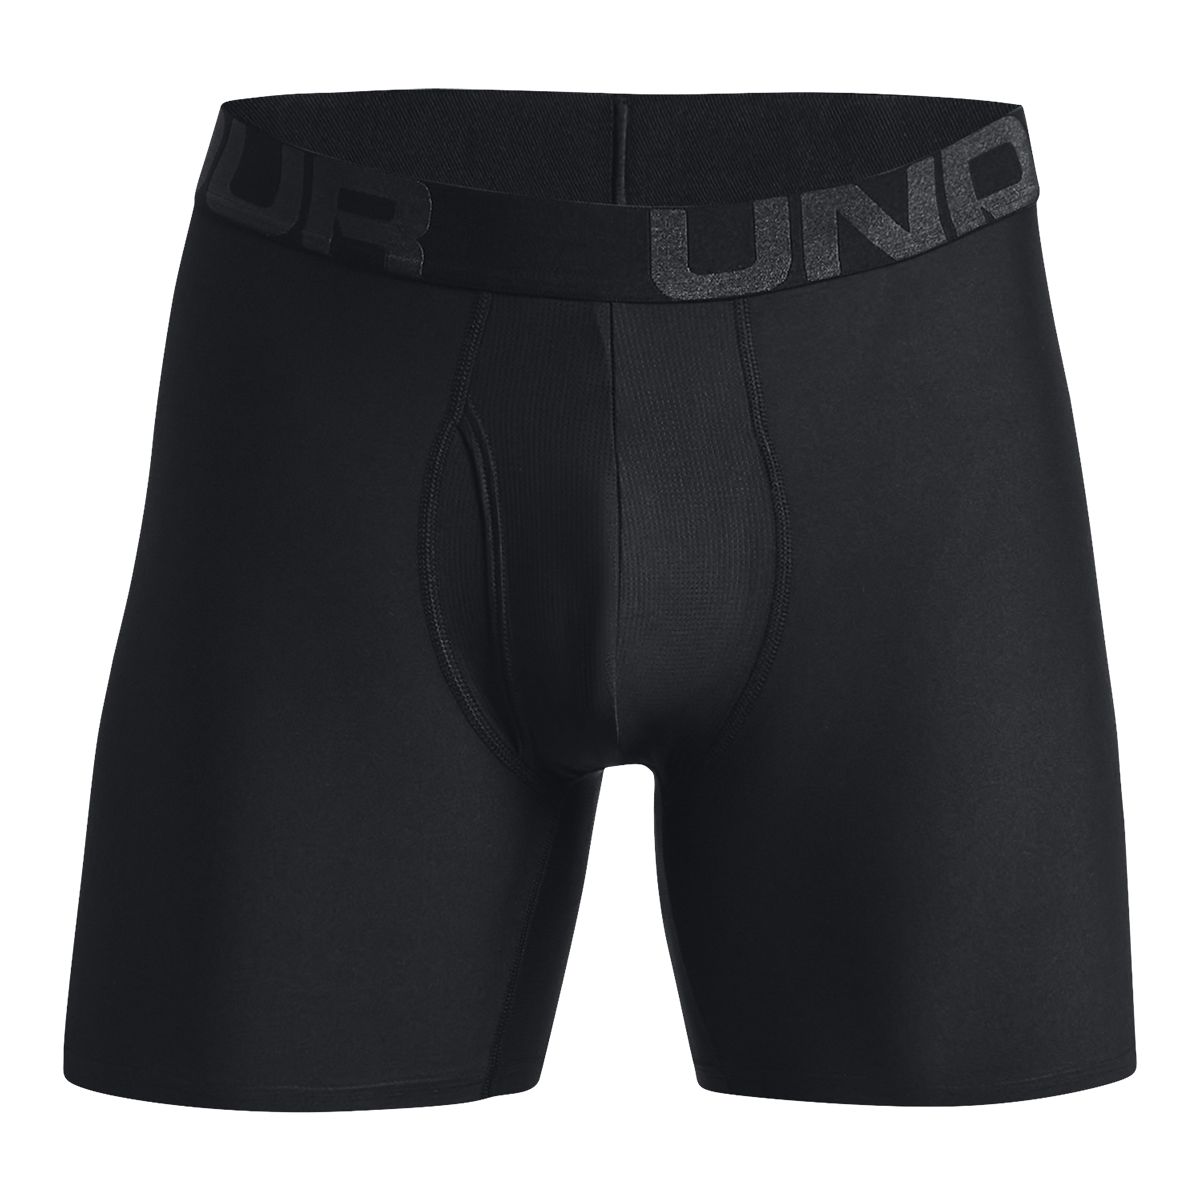 Under Armour Original Boxerjock Underwear 2 Pack 6” Boxer Brief Men’s Small